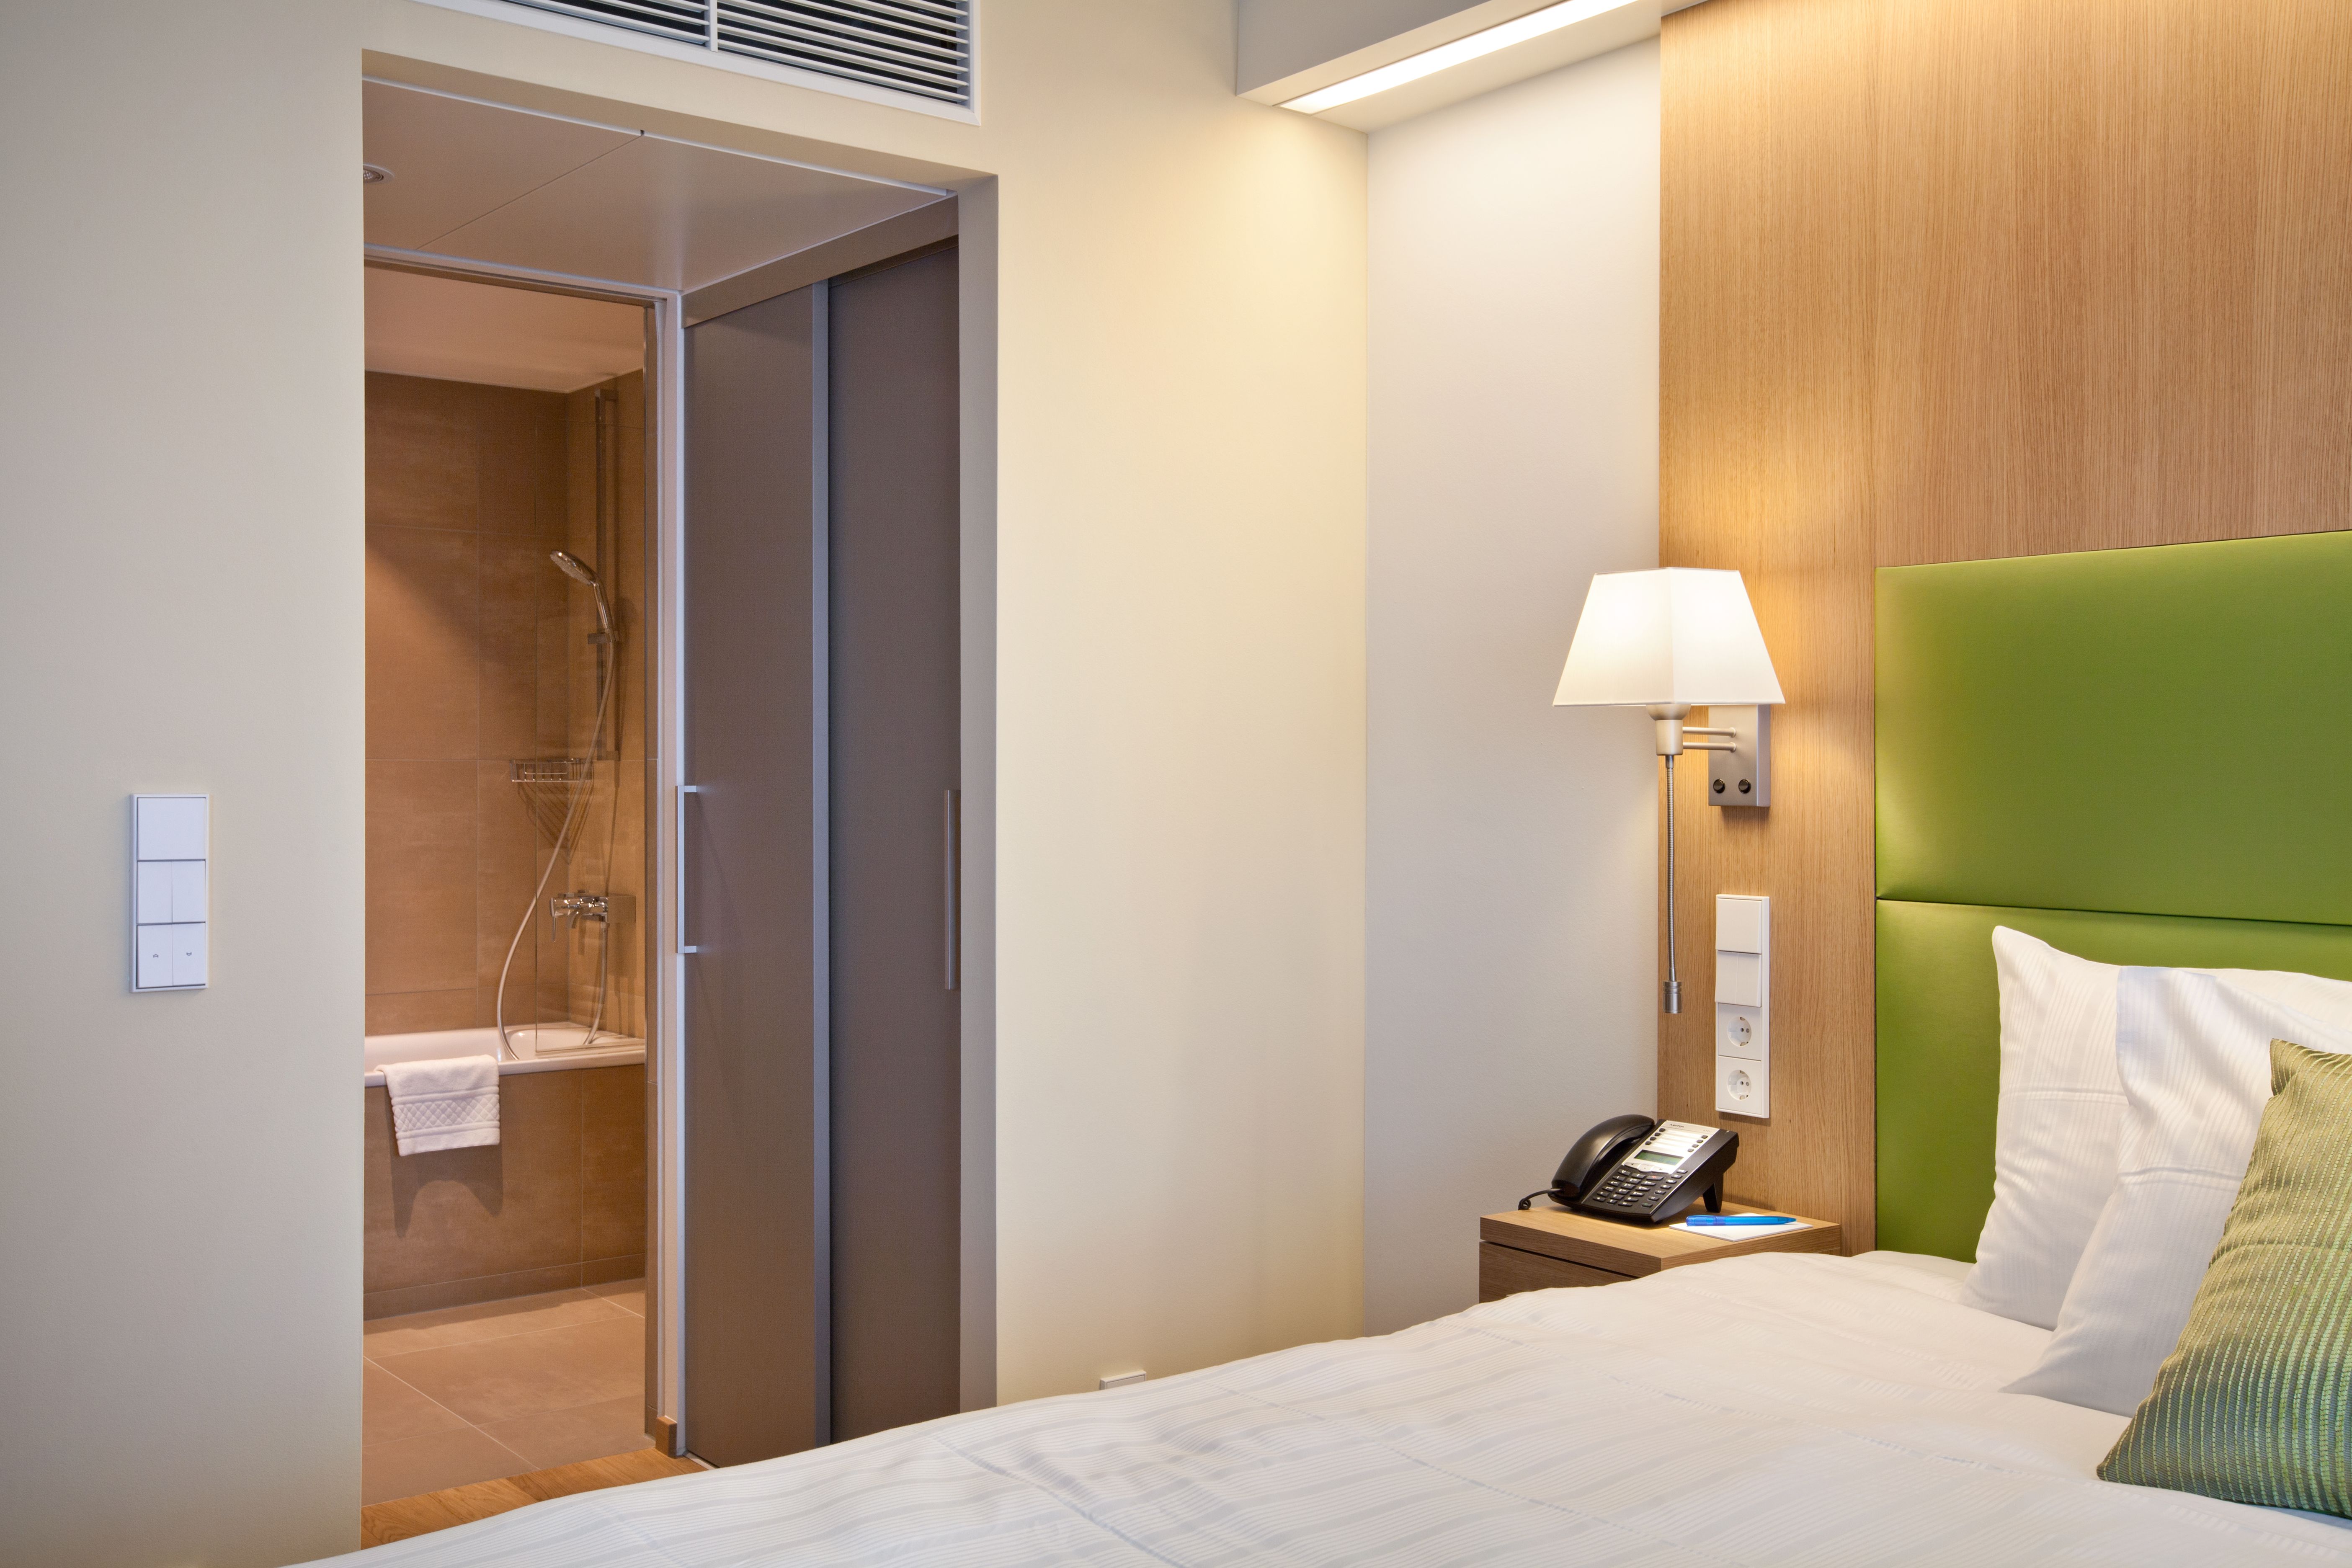 MDT_HOTEL_Mondorf Parc Hotel - Chambre - Salle de bain_2015_02_HQ